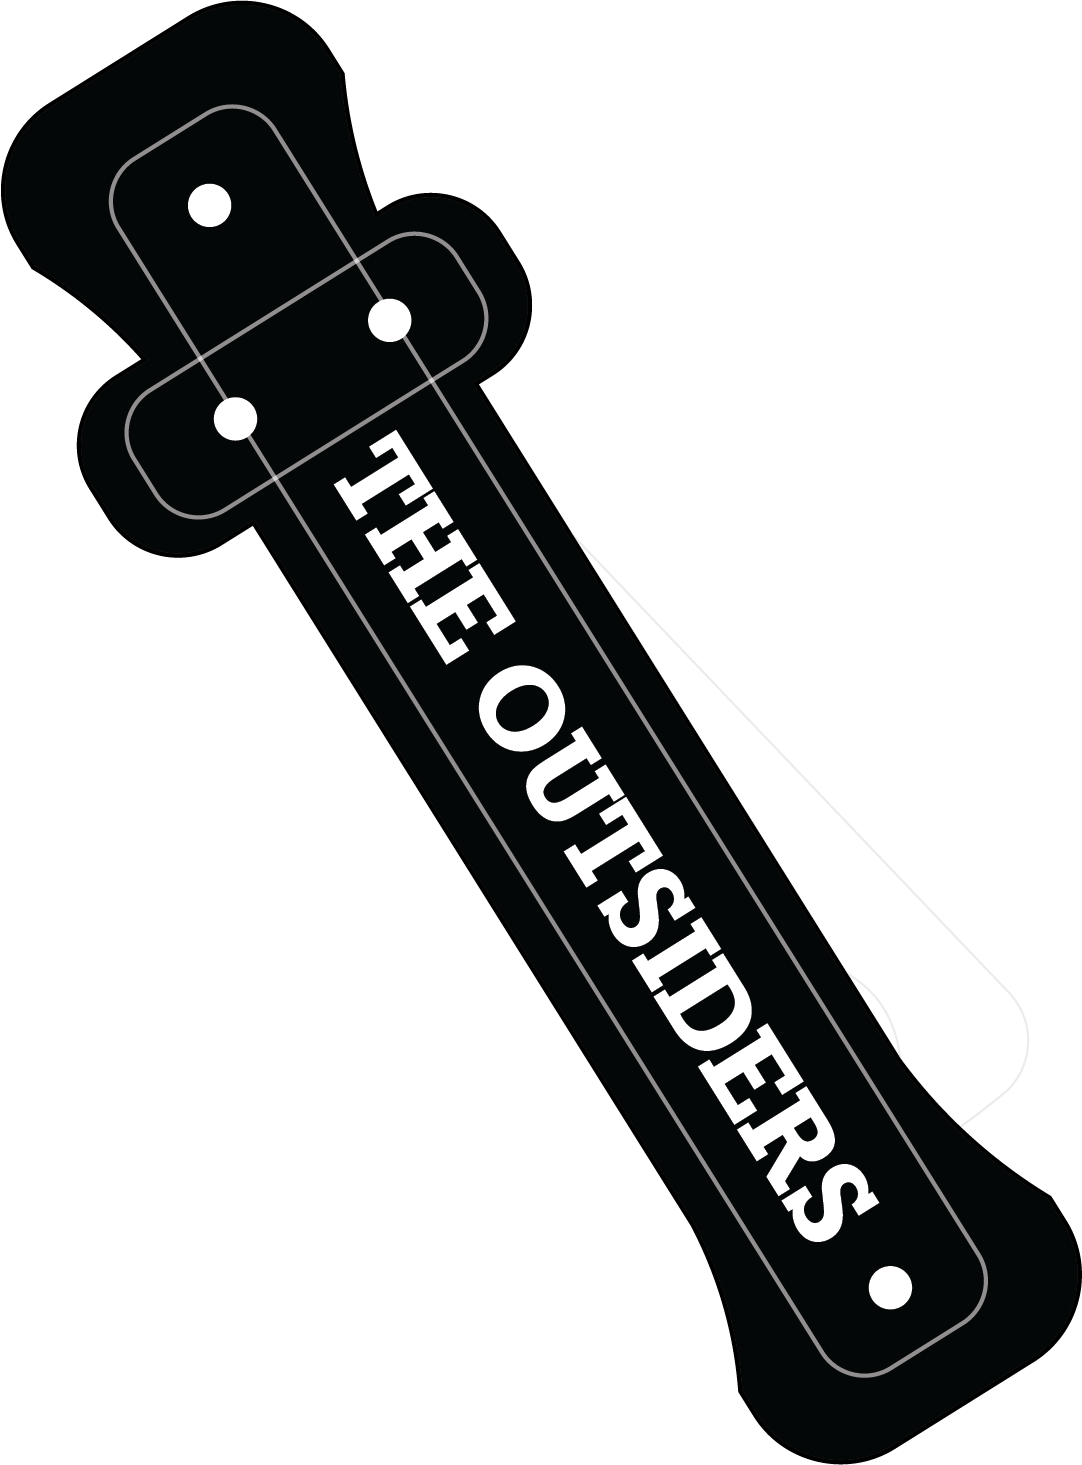 The Outsiders logo